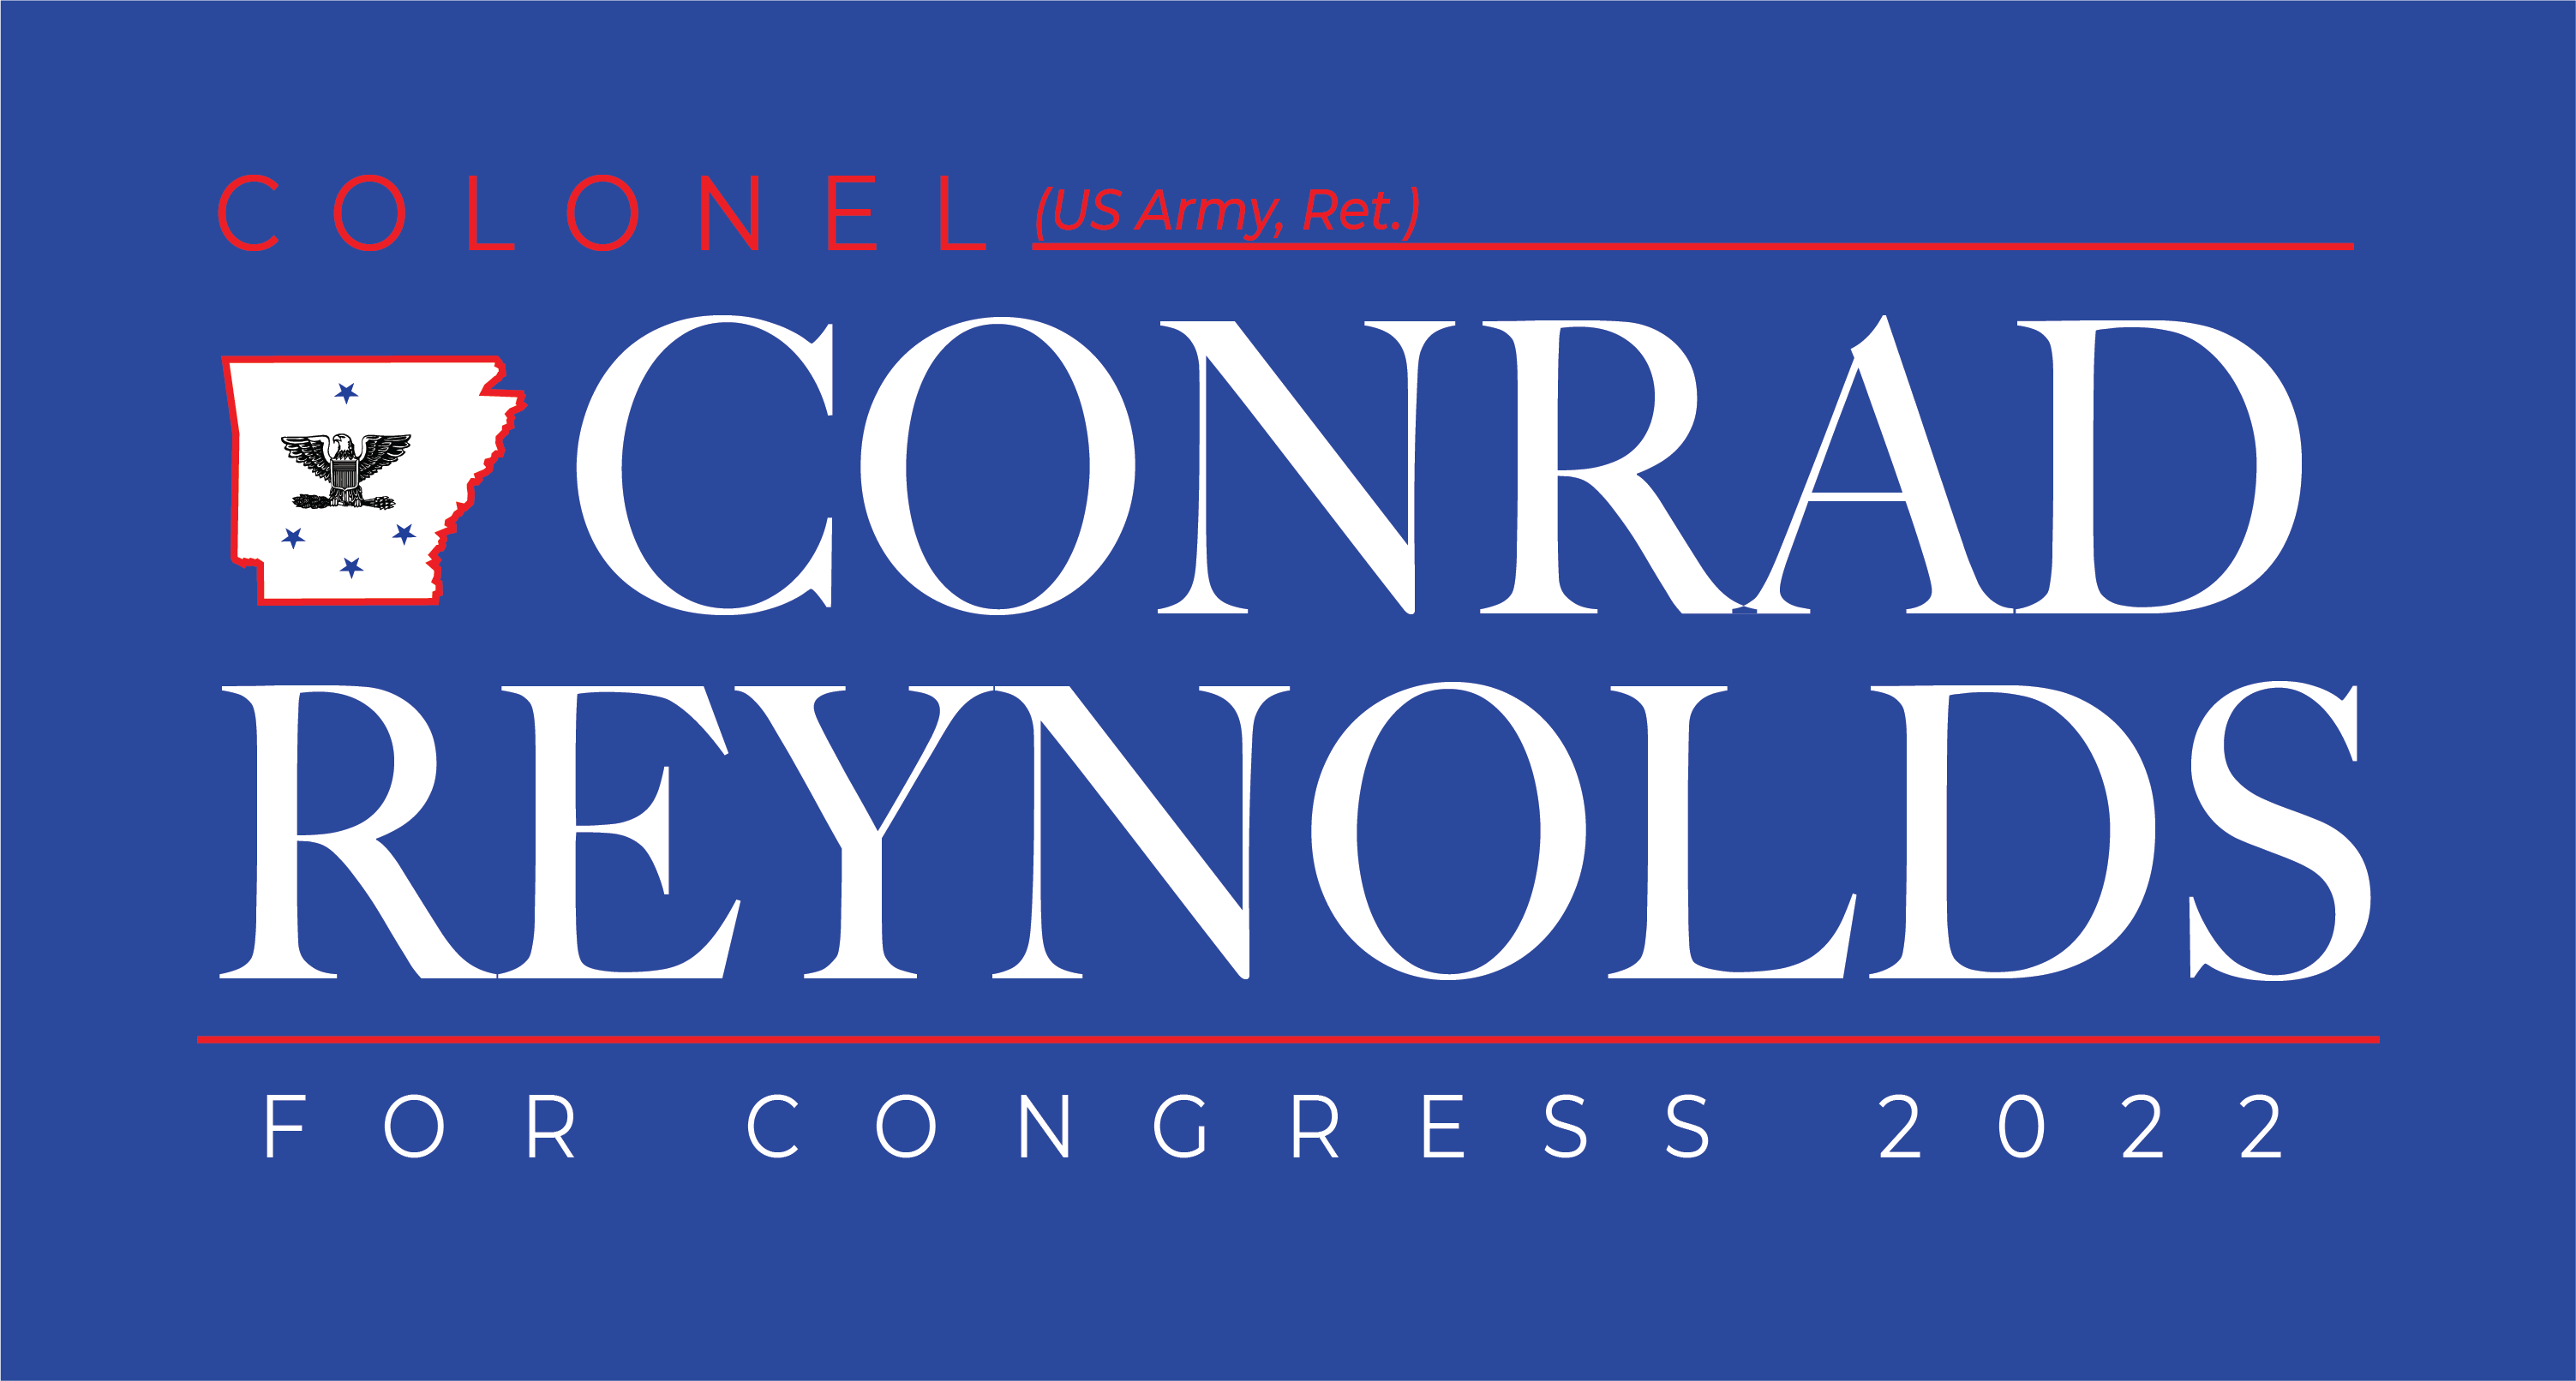 Conrad Reynolds for Congress logo